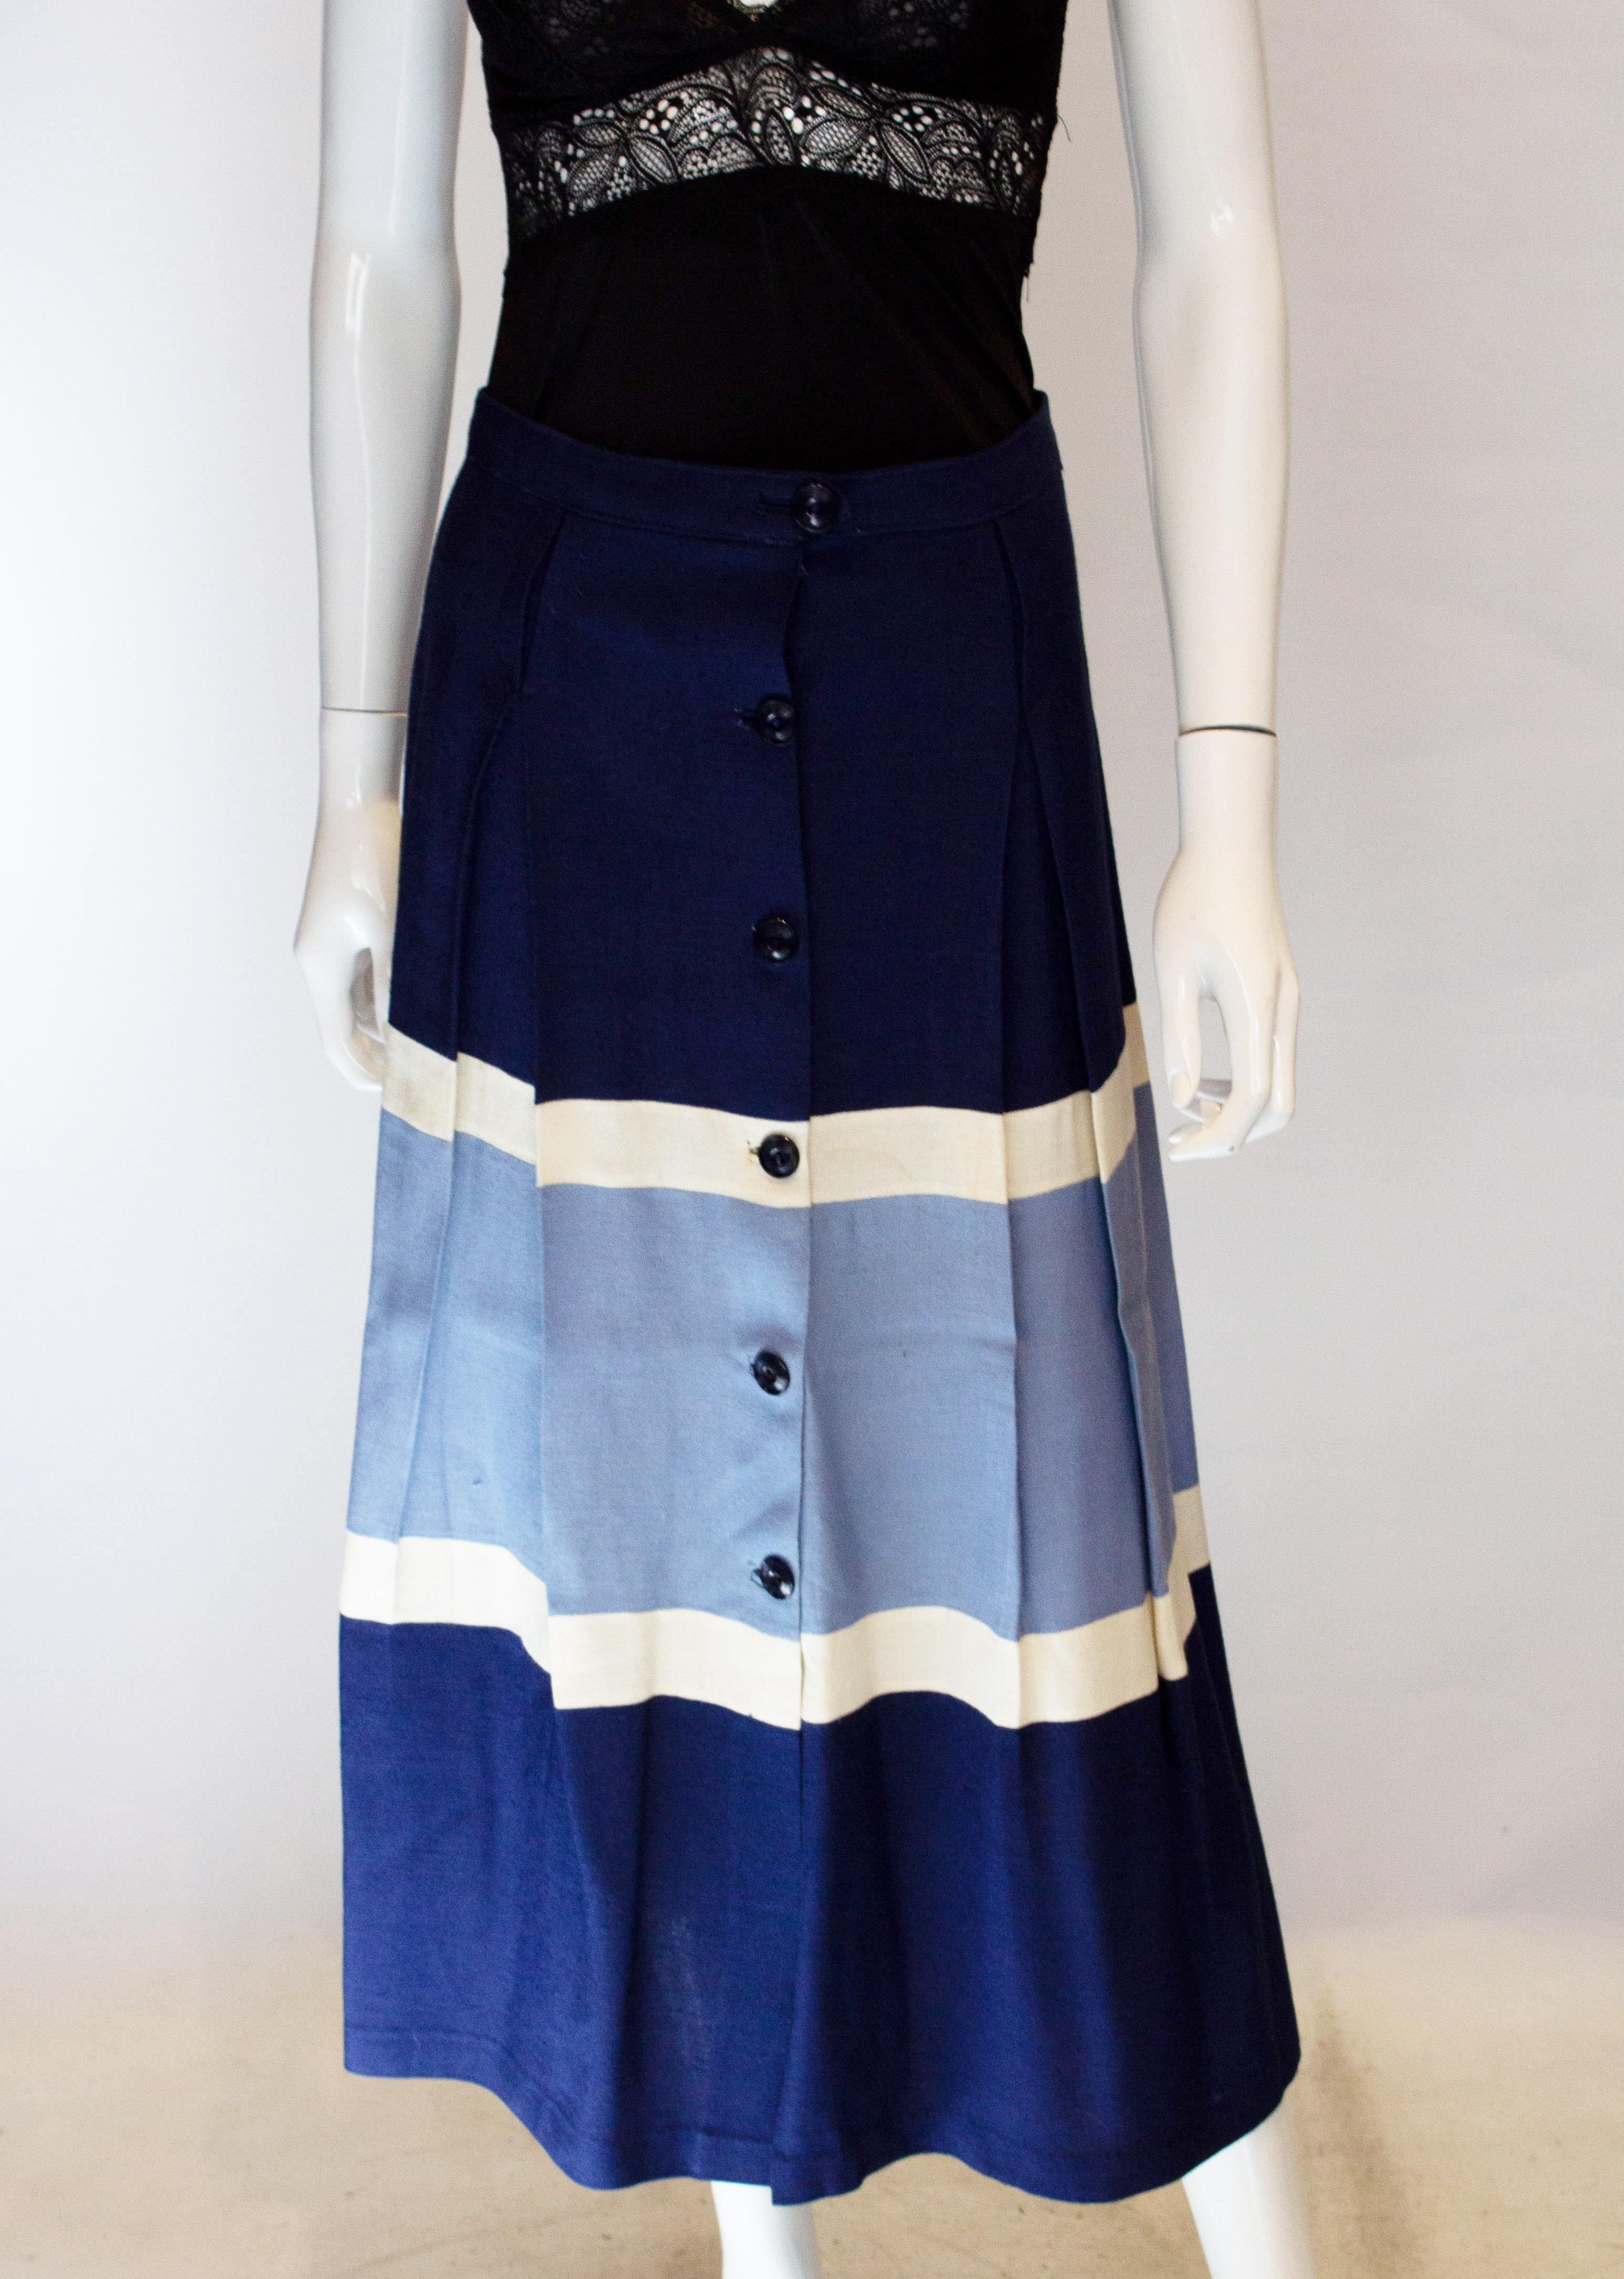 Women's Vintage Blue and White skirt